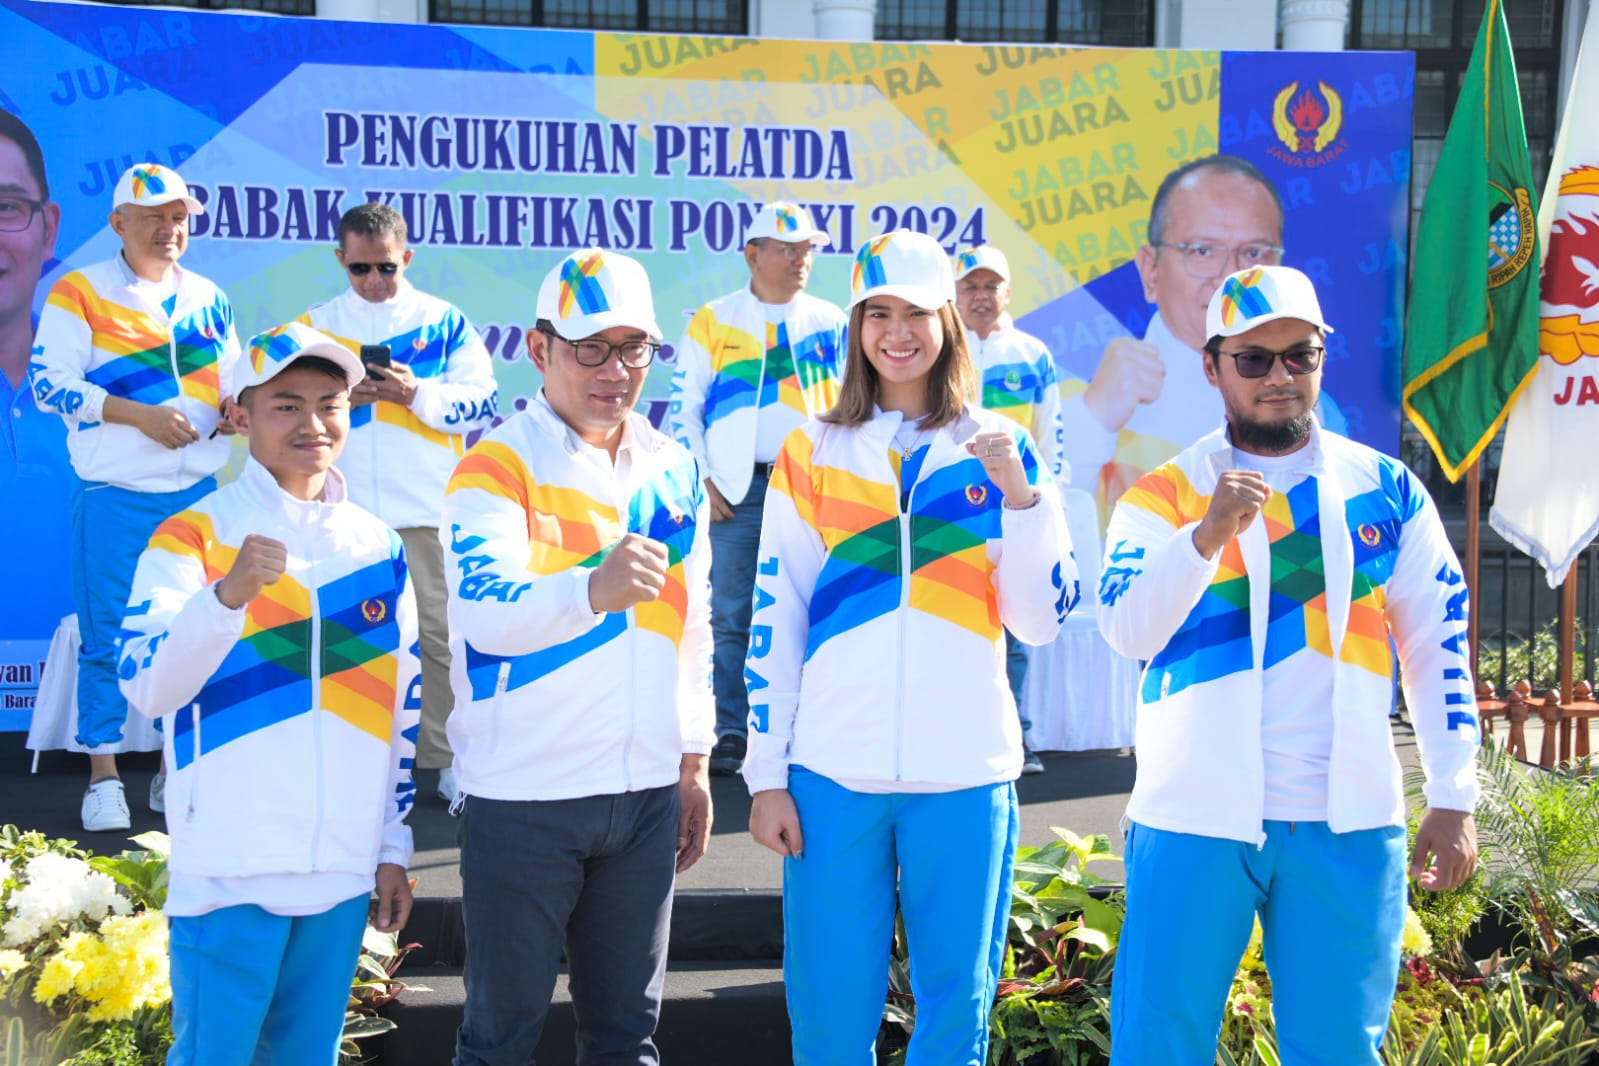 Ridwan Kamil Kukuhkan Pelatda Kualifikasi PON XXI Tahun 2024, Jabar Targetkan Hattrick Juara Umum